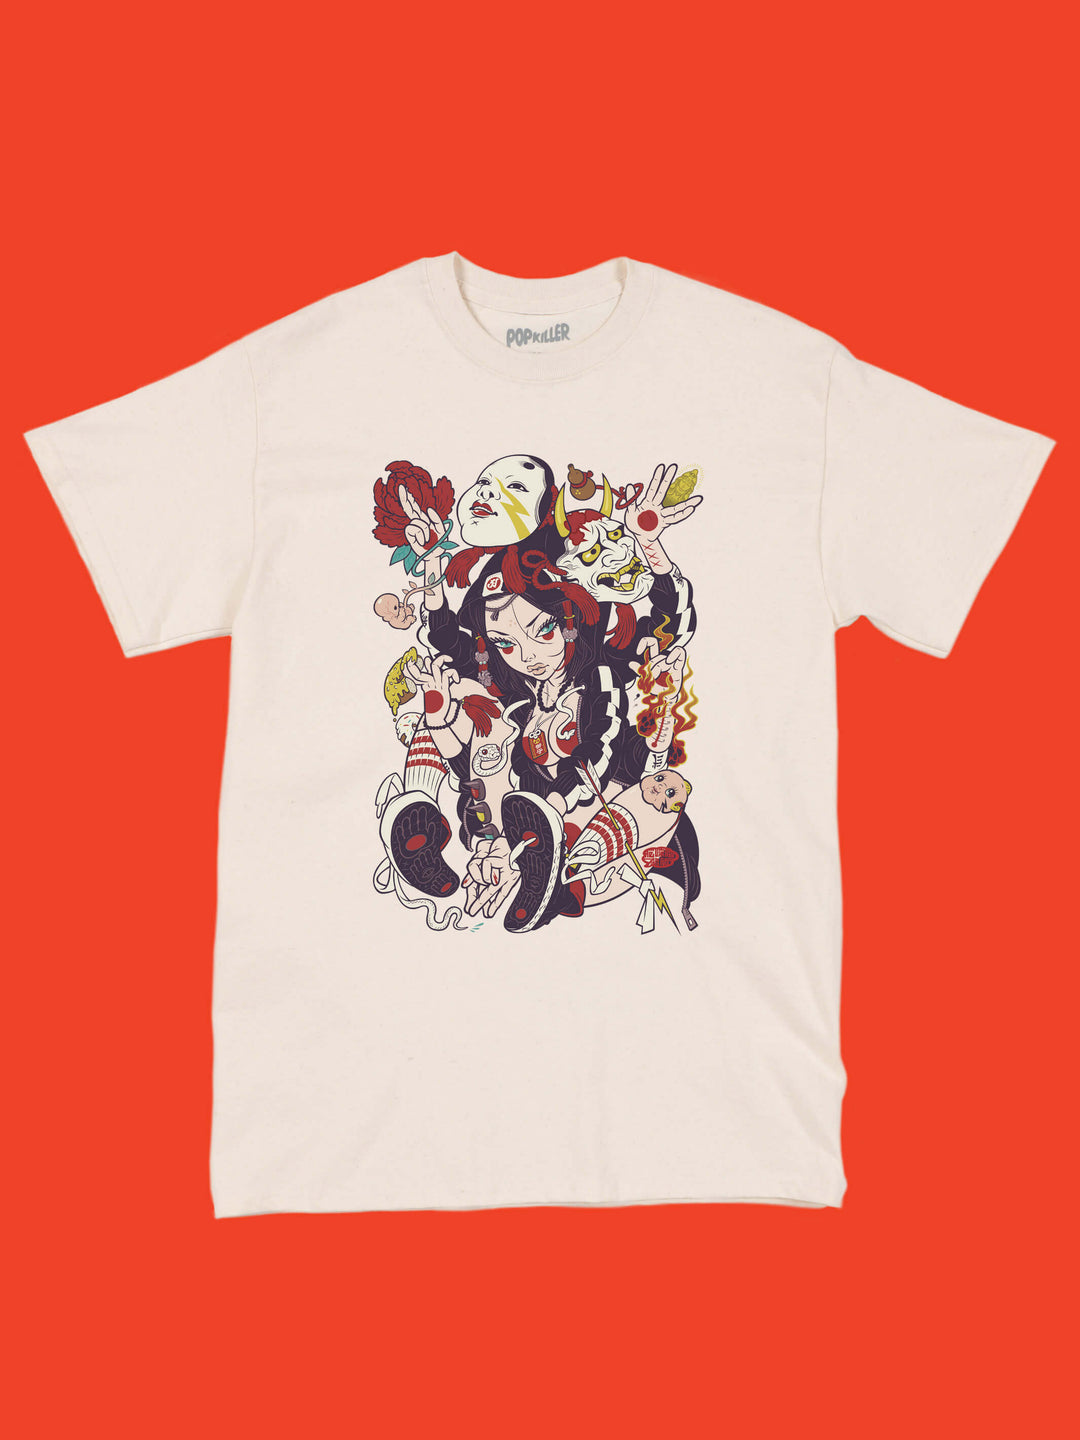 Anime Japanese deity graphic t-shirt.